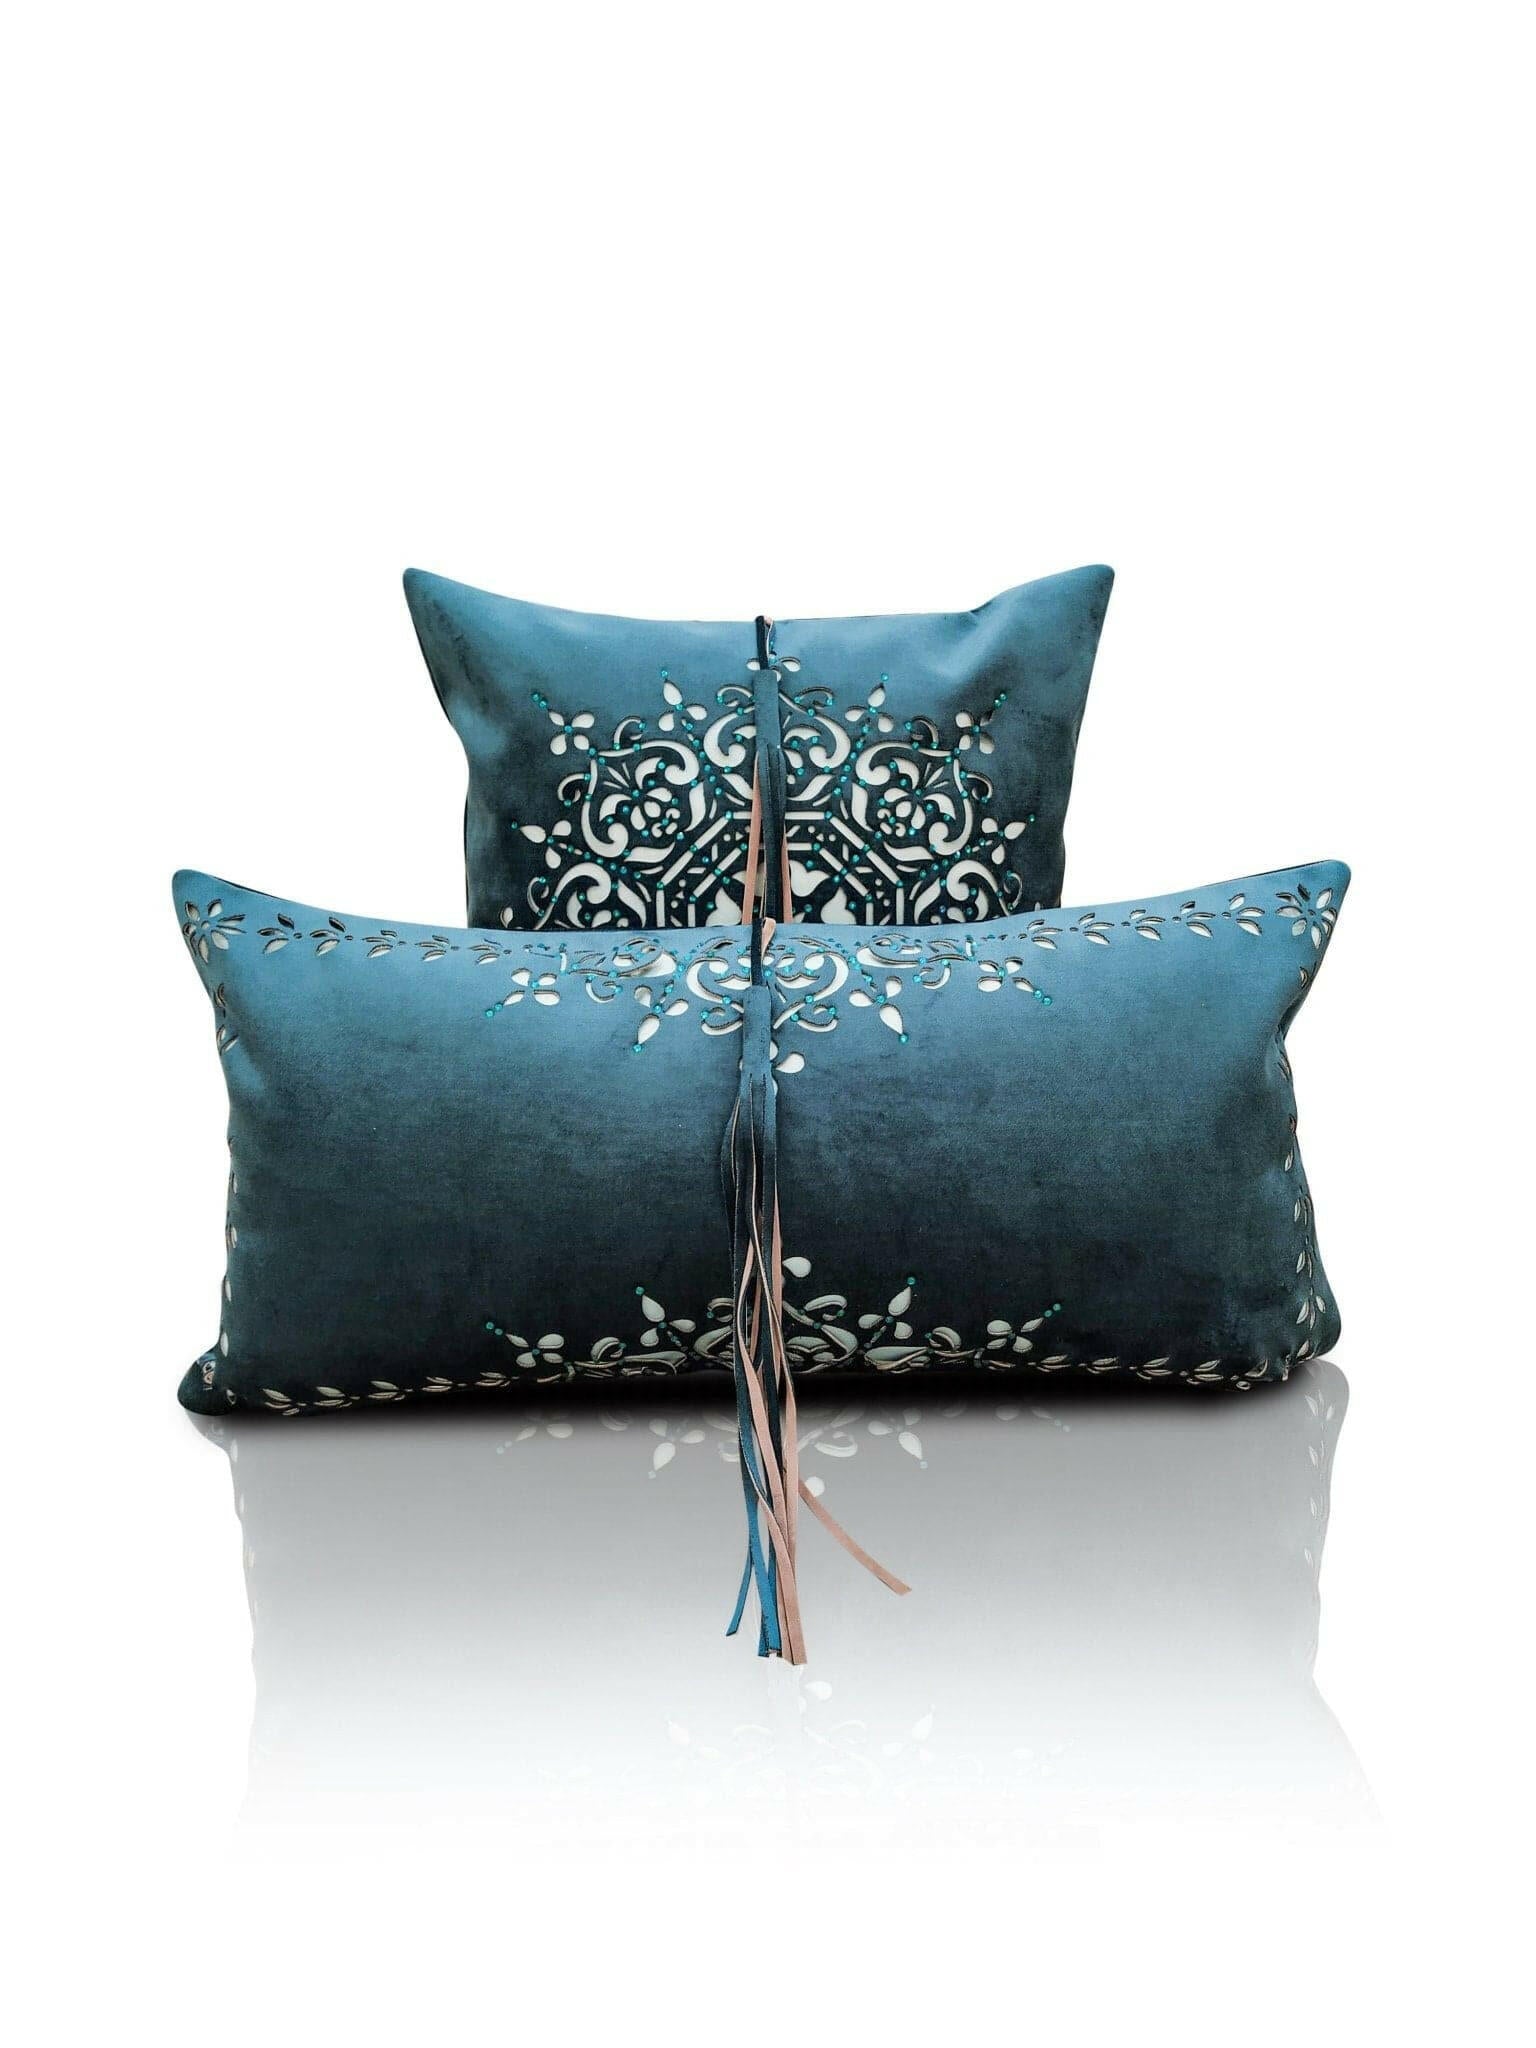 Damask Cushion Cover - Creative Home Designs Pillowcases, Turkish Throw Pillows & Shams, Petrol Blue Color Cut Out Sham With Diamonds